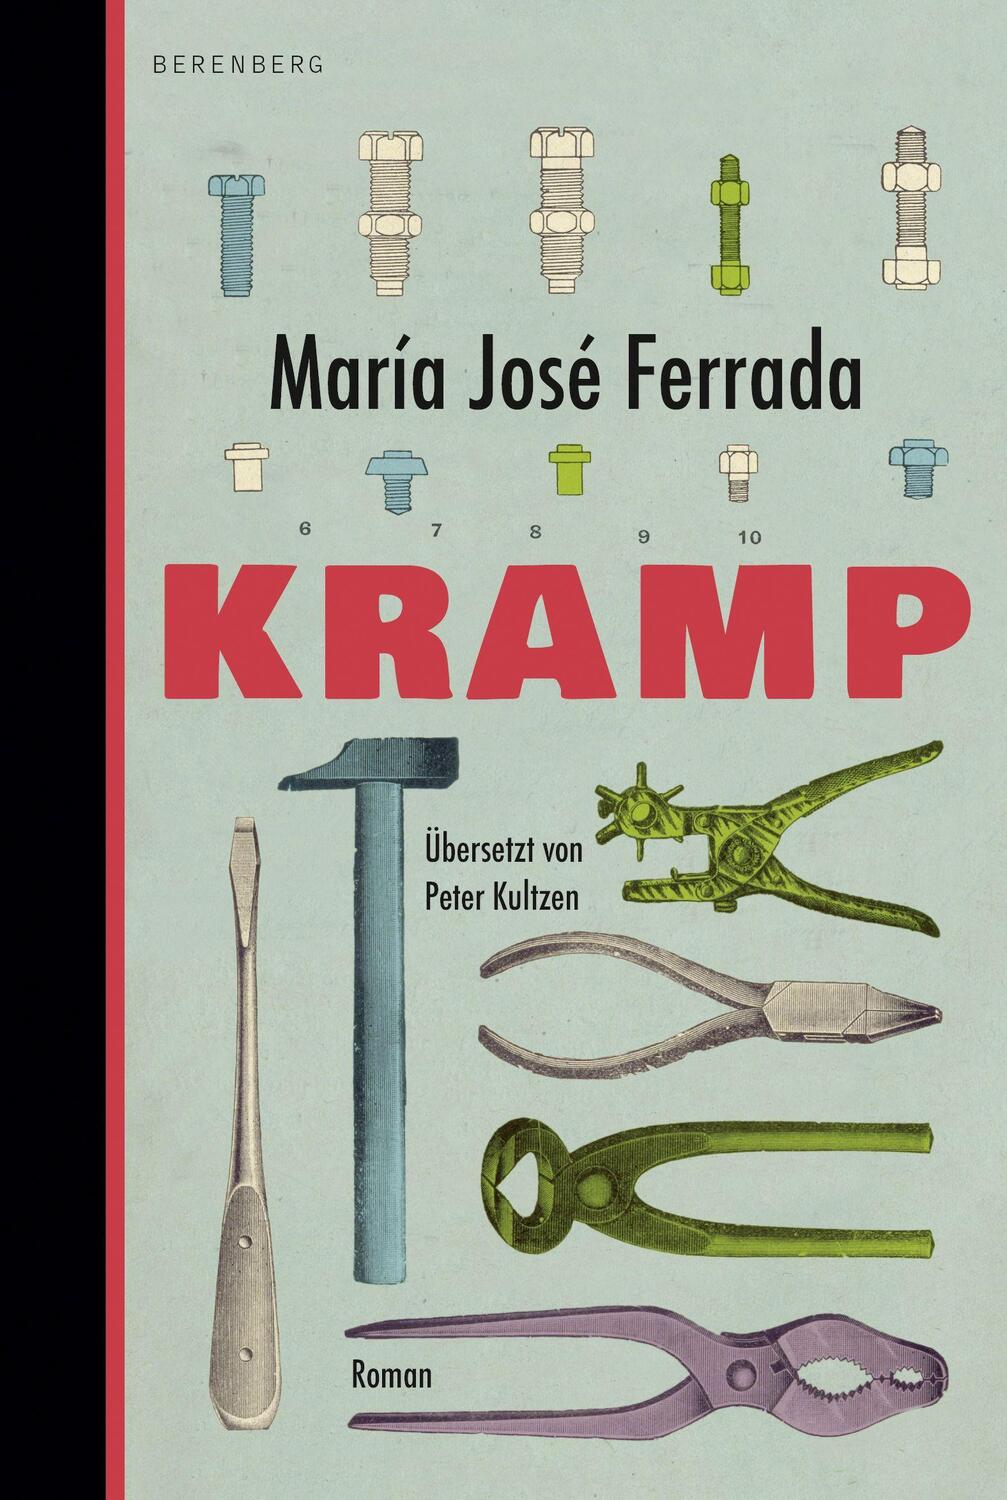 Kramp - Ferrada, María José